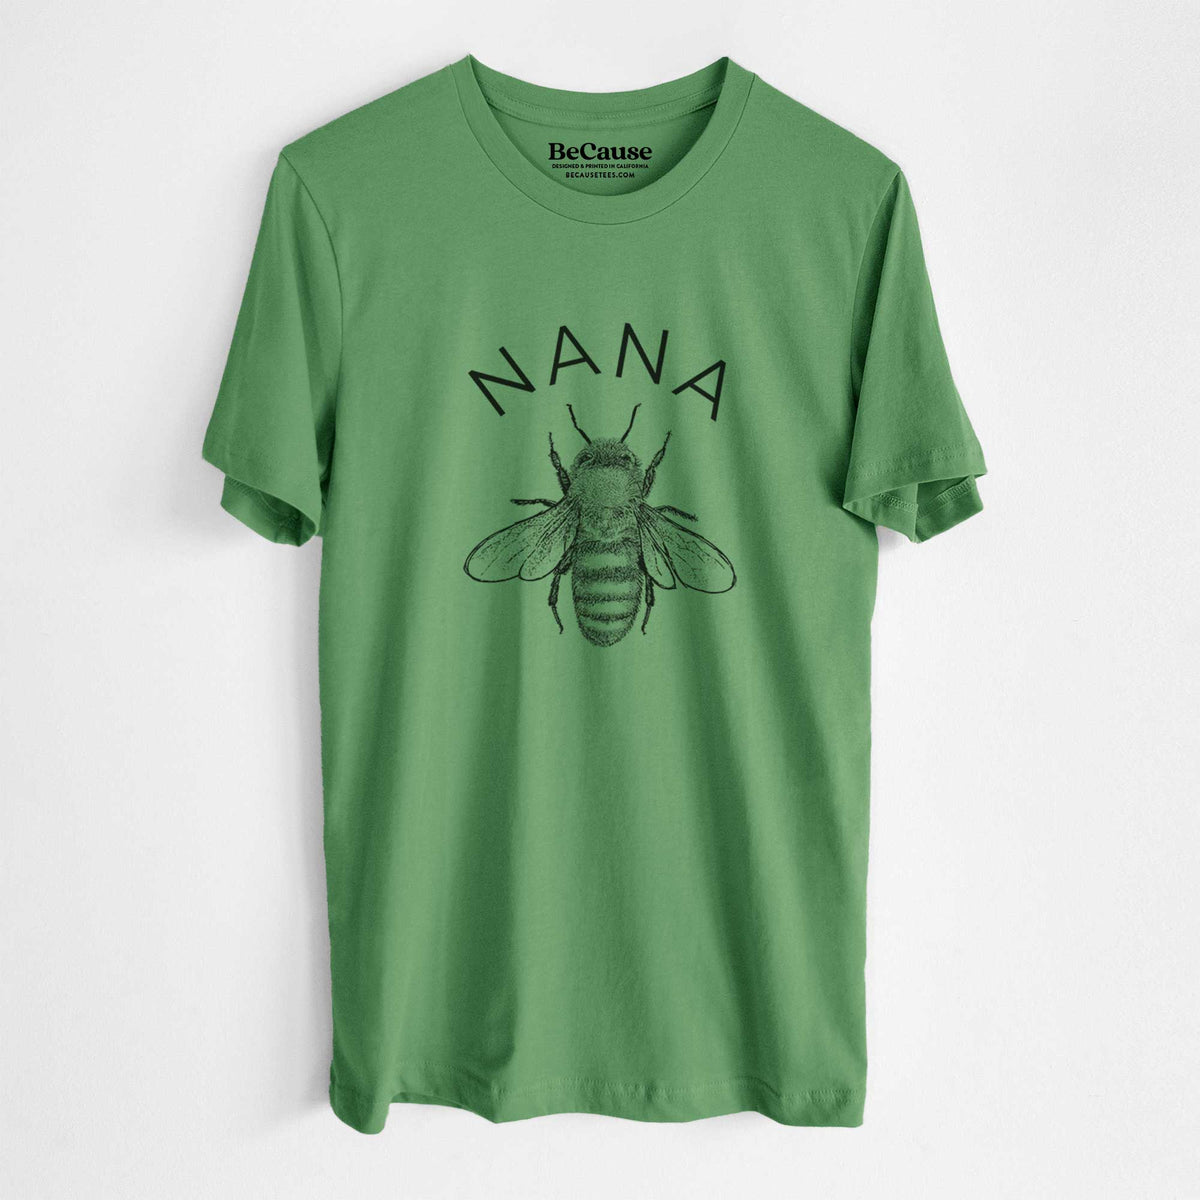 Nana Bee - Lightweight 100% Cotton Unisex Crewneck